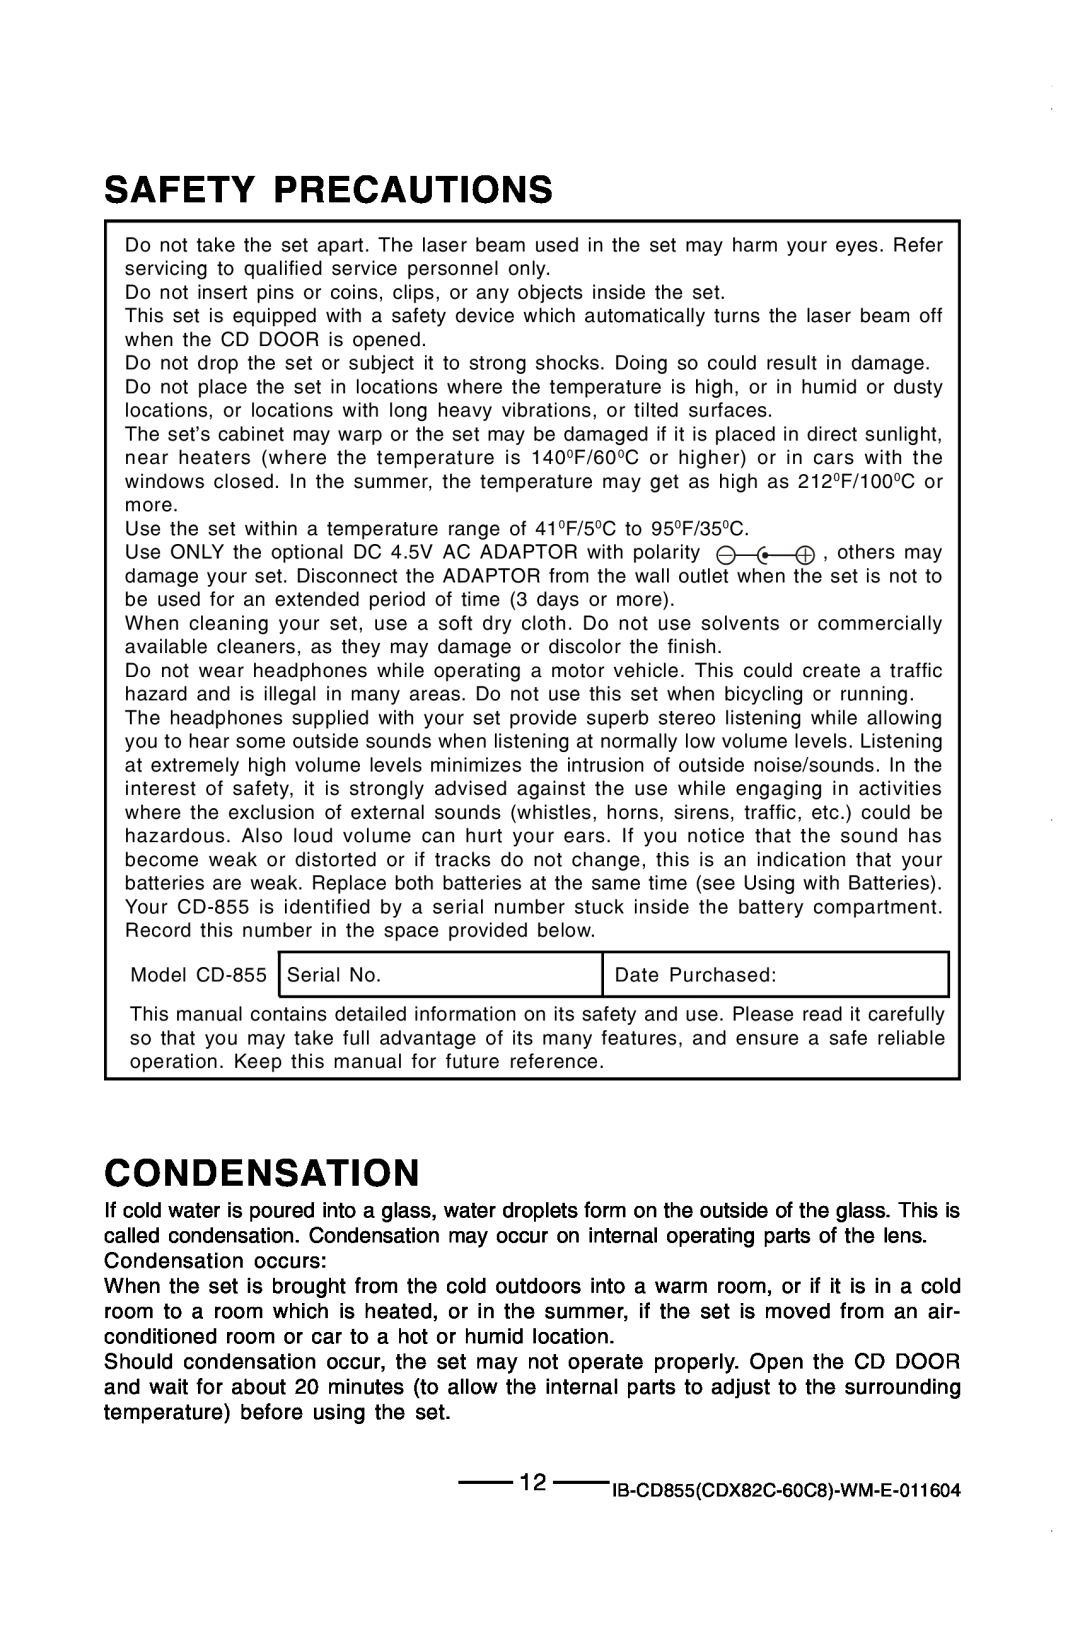 Durabrand CD-855 manual Safety Precautions, Condensation 